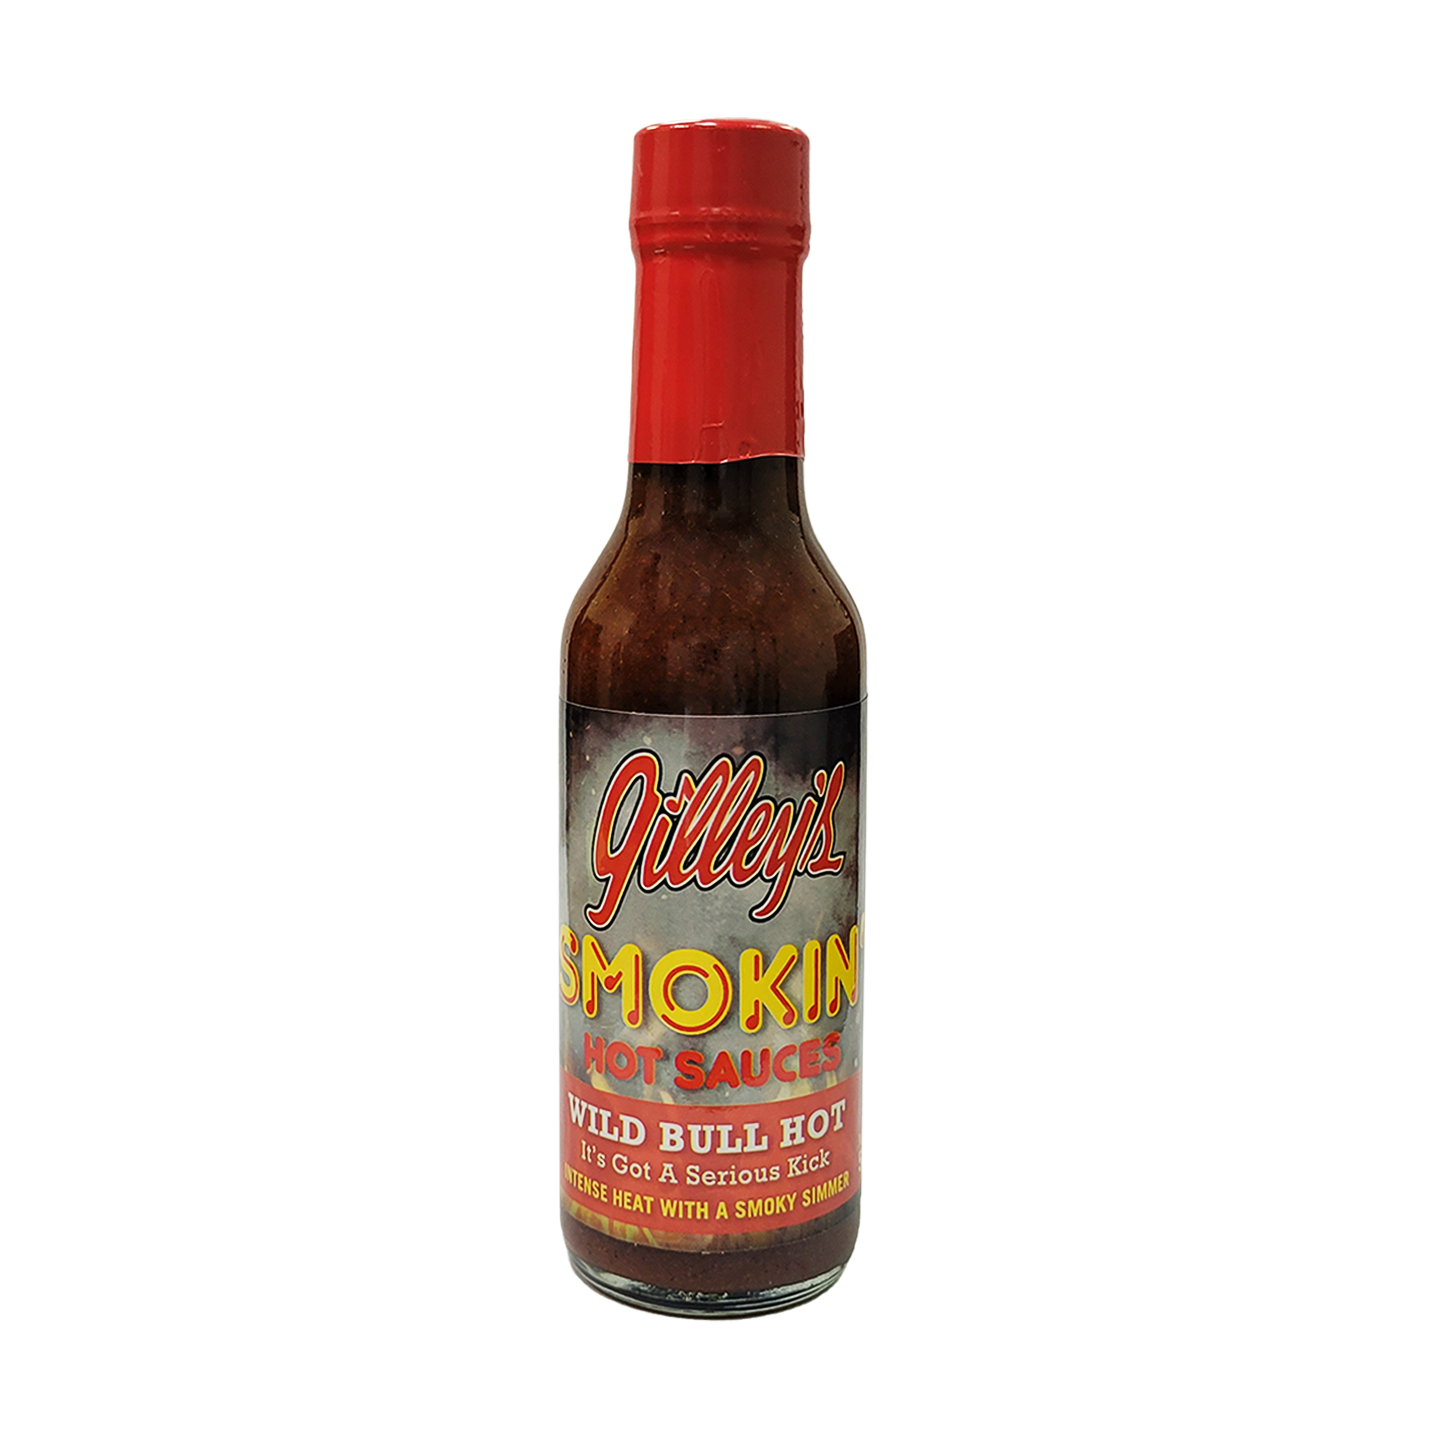 Gilley's Smokin' Hot Sauce Wild Bull Hot